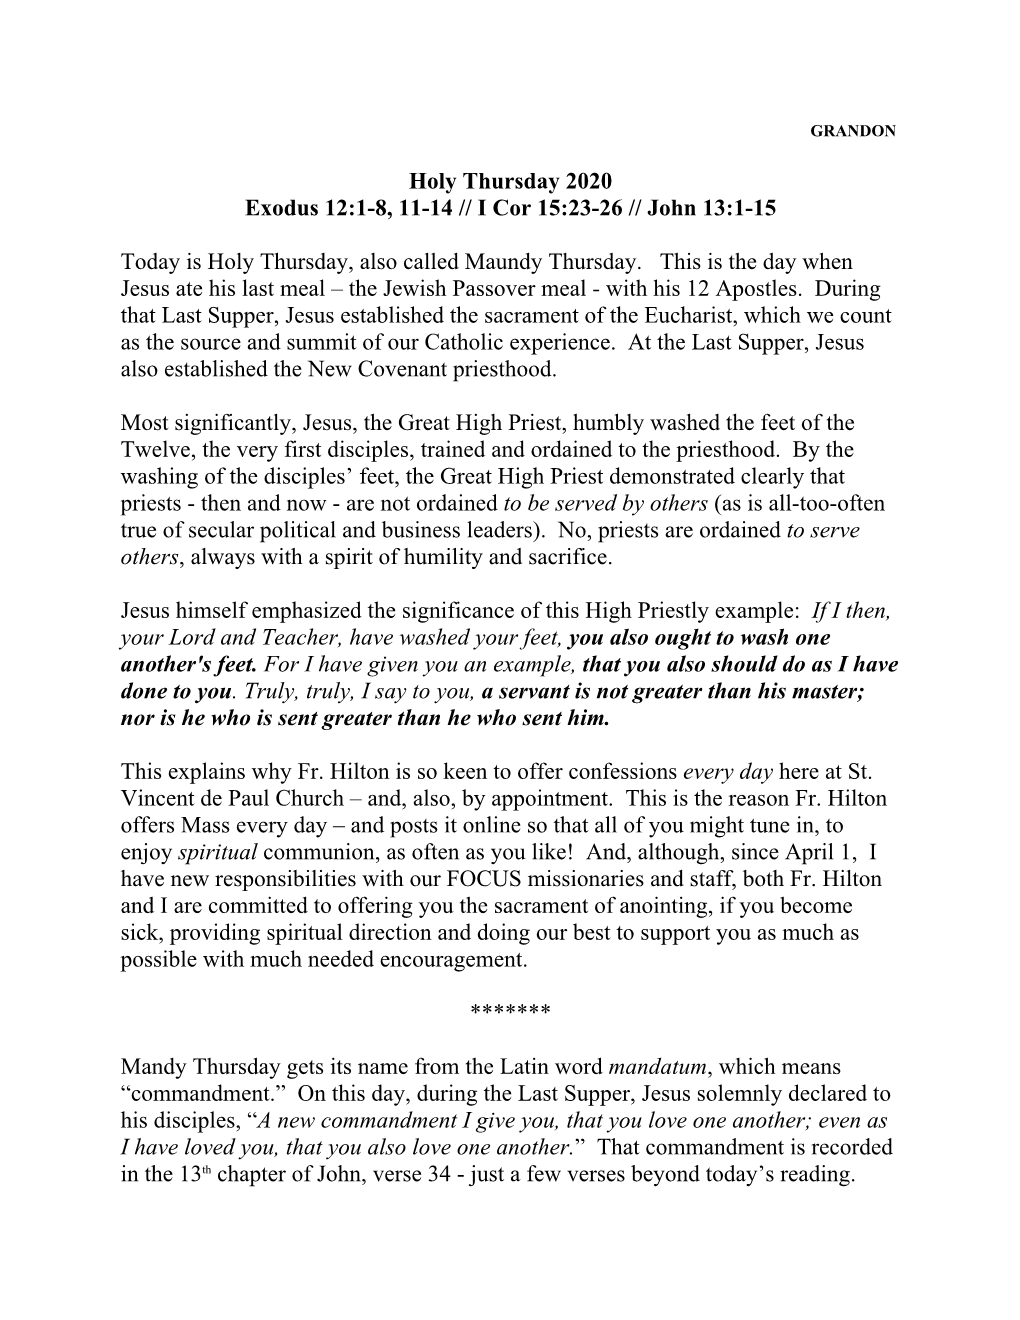 Holy Thursday 2020 Exodus 12:1-8, 11-14 // I Cor 15:23-26 // John 13:1-15